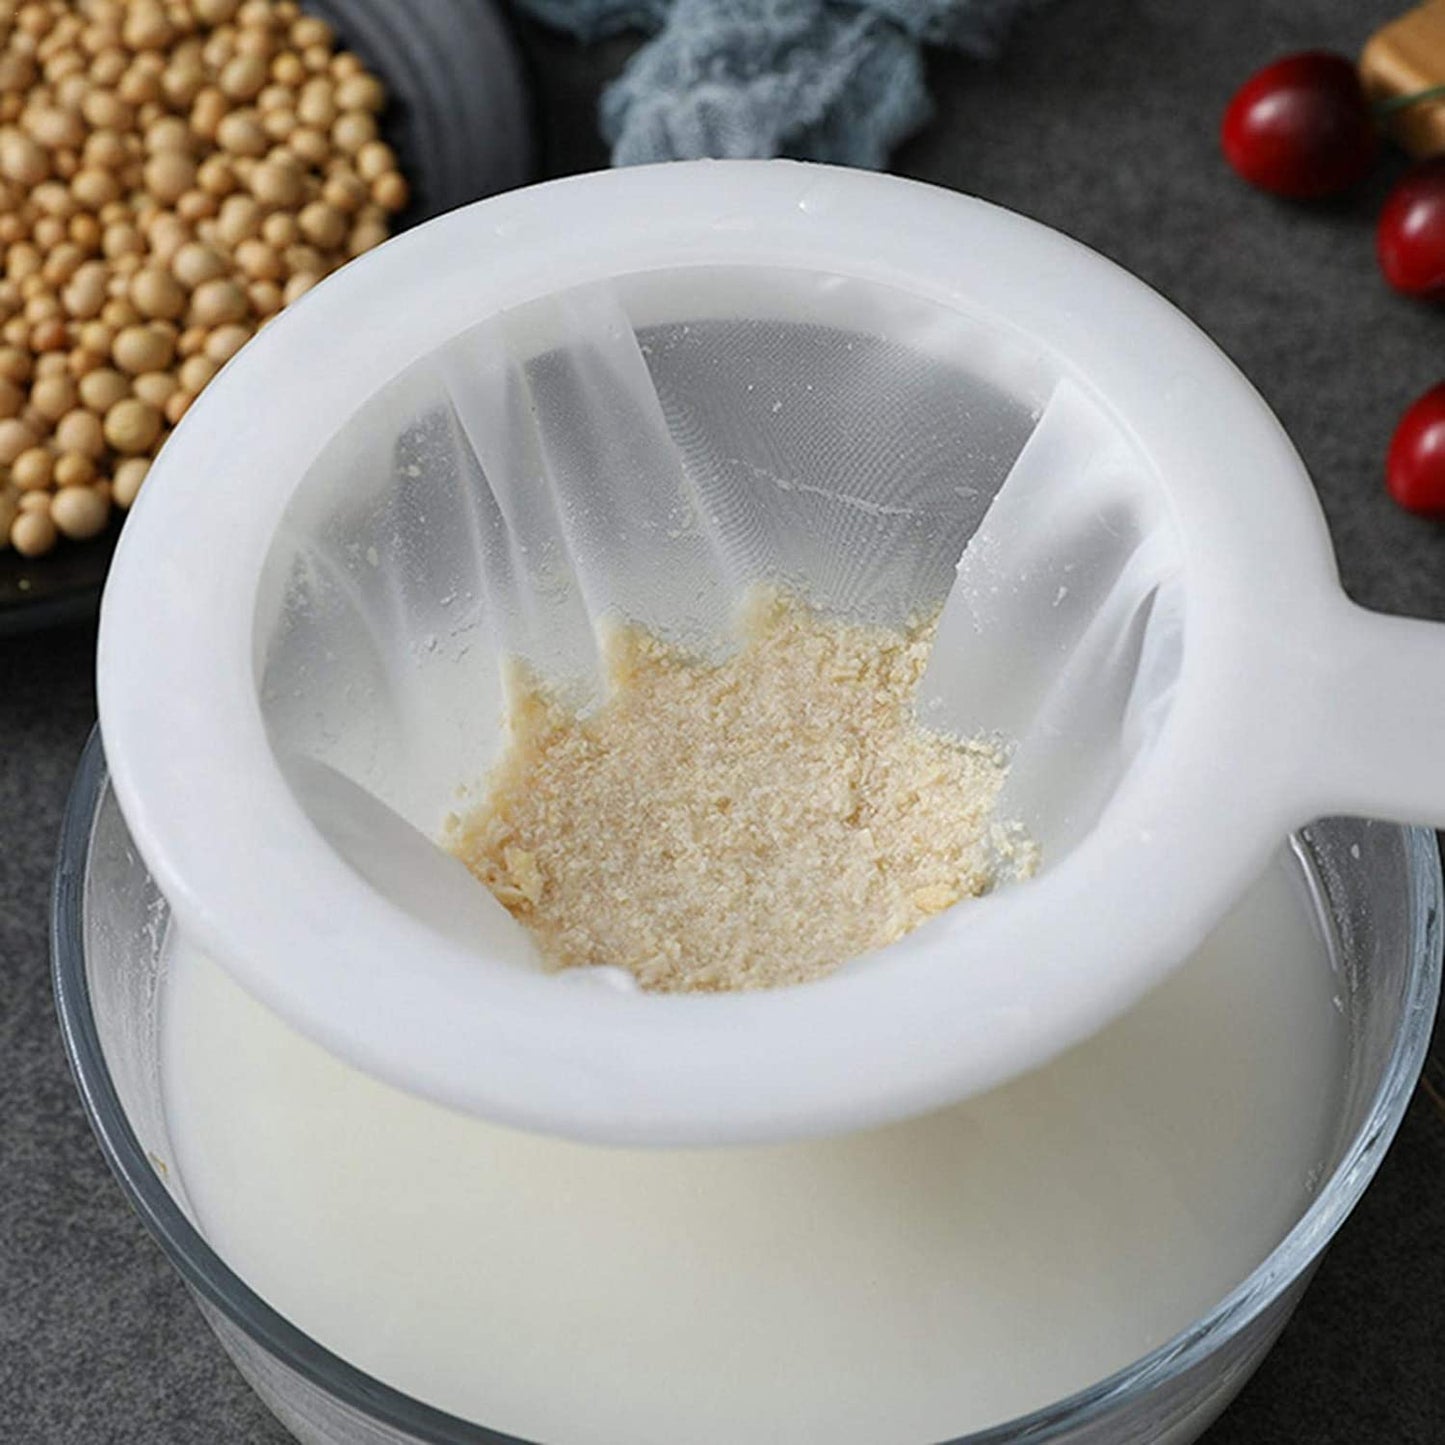 Ultra-fine Mesh Strainer, Multiple Usage Reusable Food Strainer, Kitchen Nylon Mesh Filter Spoon for Soy Milk, Quinoa, Tea, Soup, Sifting, Baking, Straining